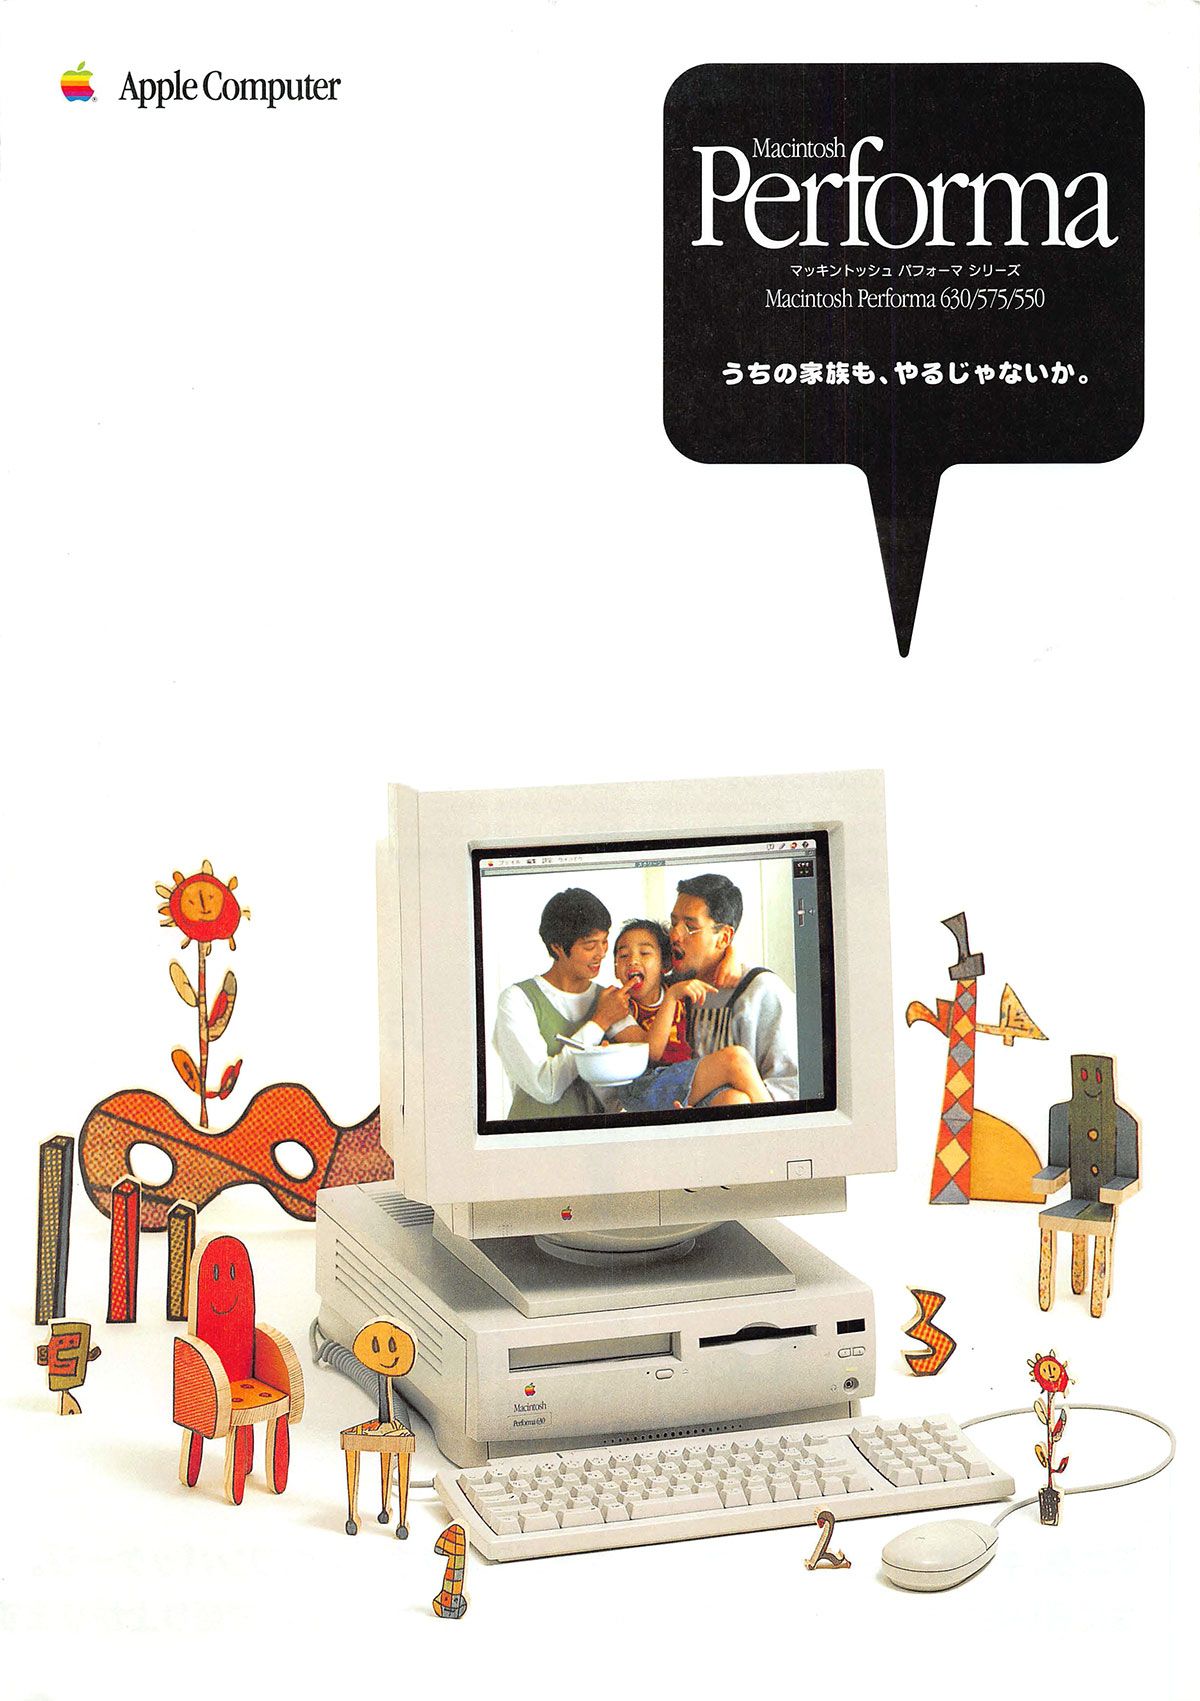 Macintosh Performa 630/575/550